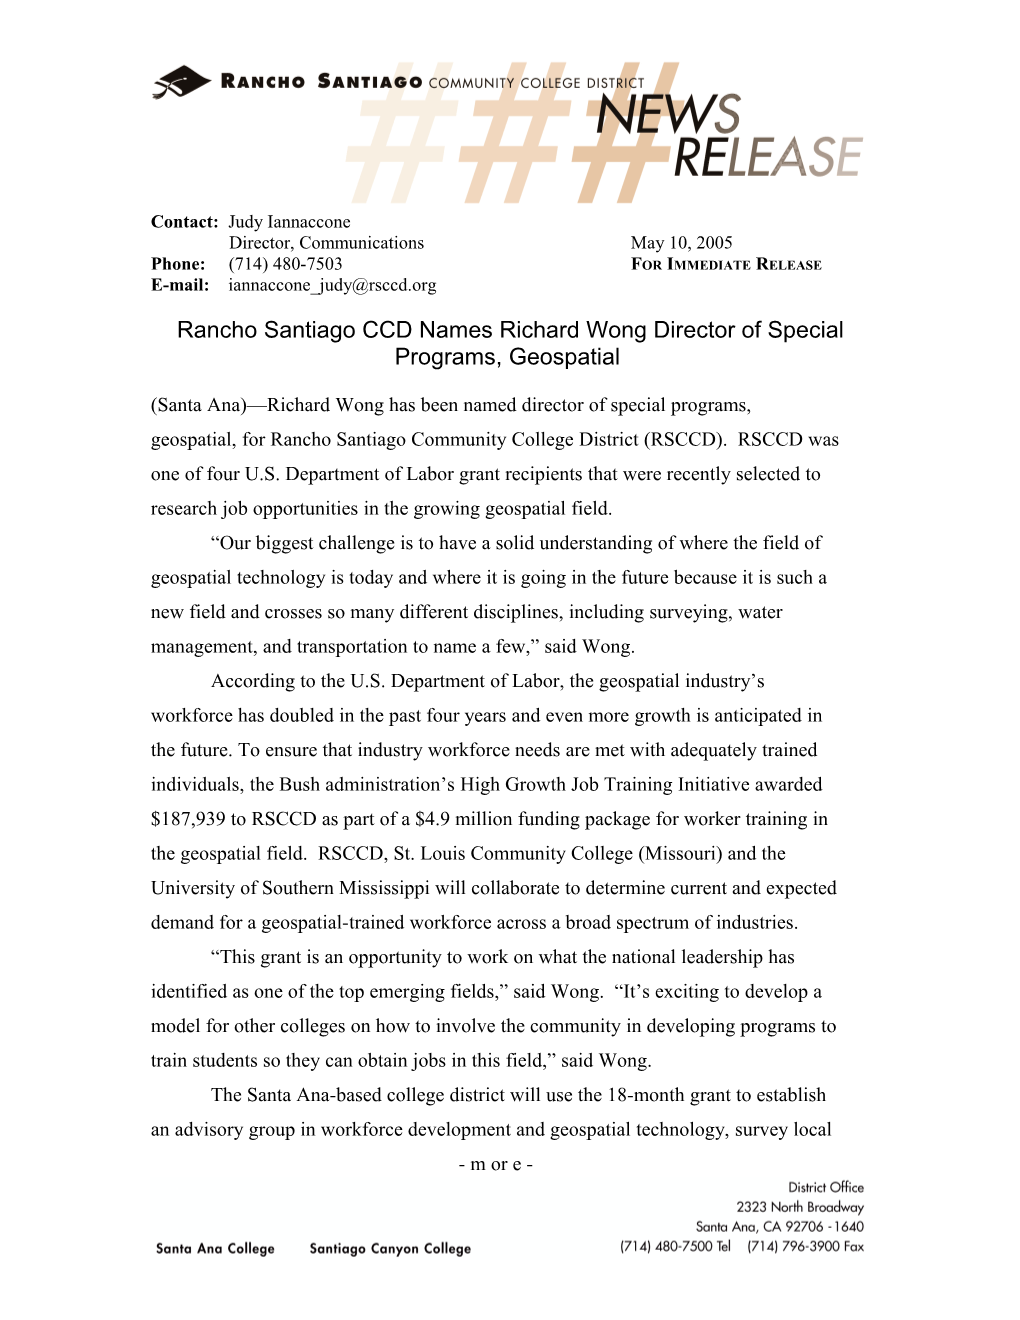 Rancho Santiago CCD Names Richard Wong Director of Special Programs, Geospatial